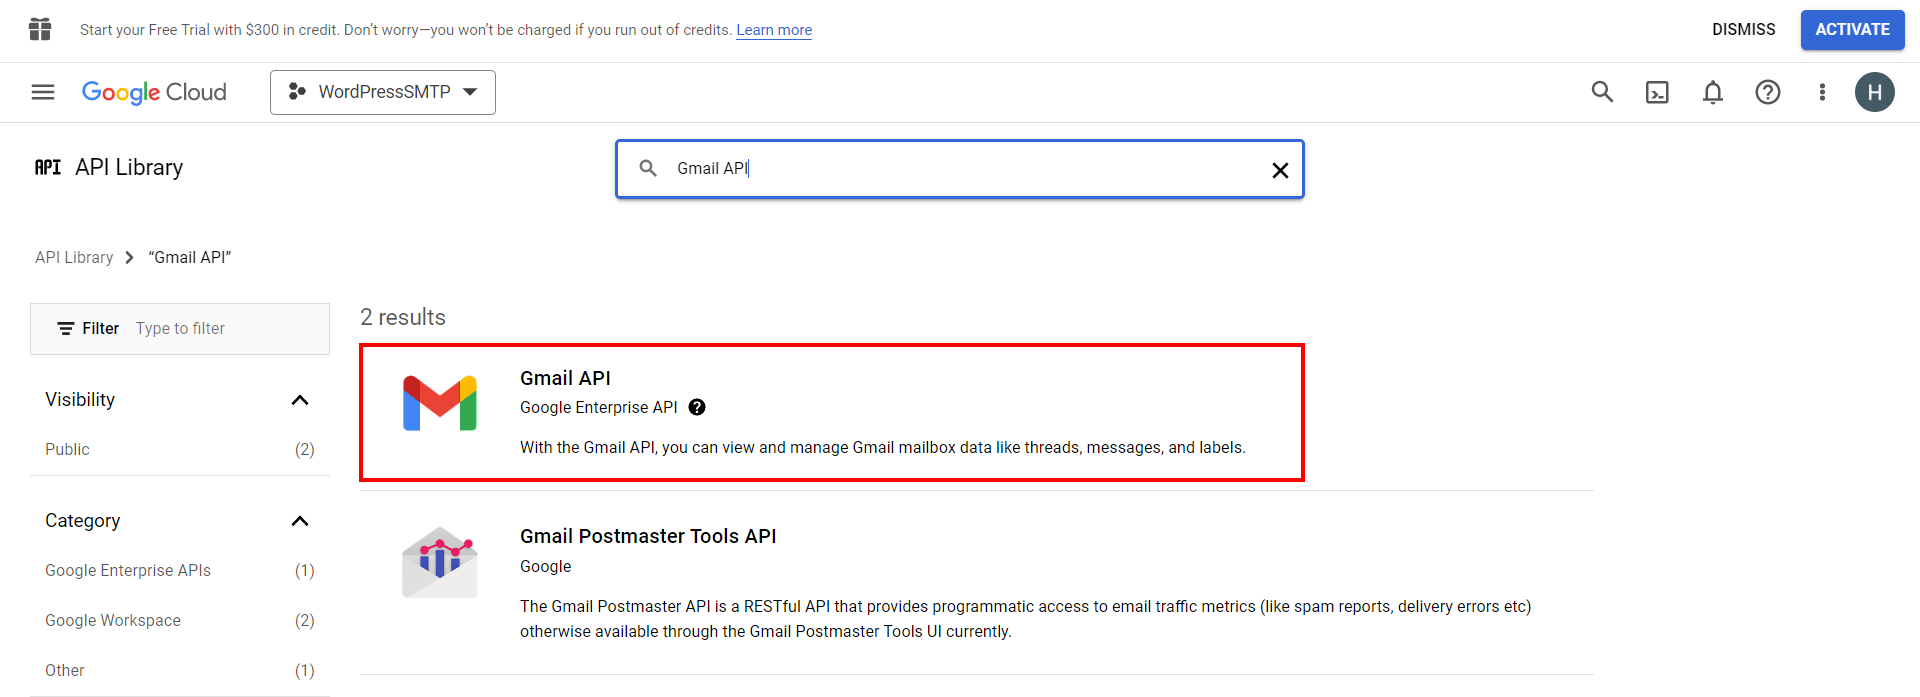 Select the Gmail API